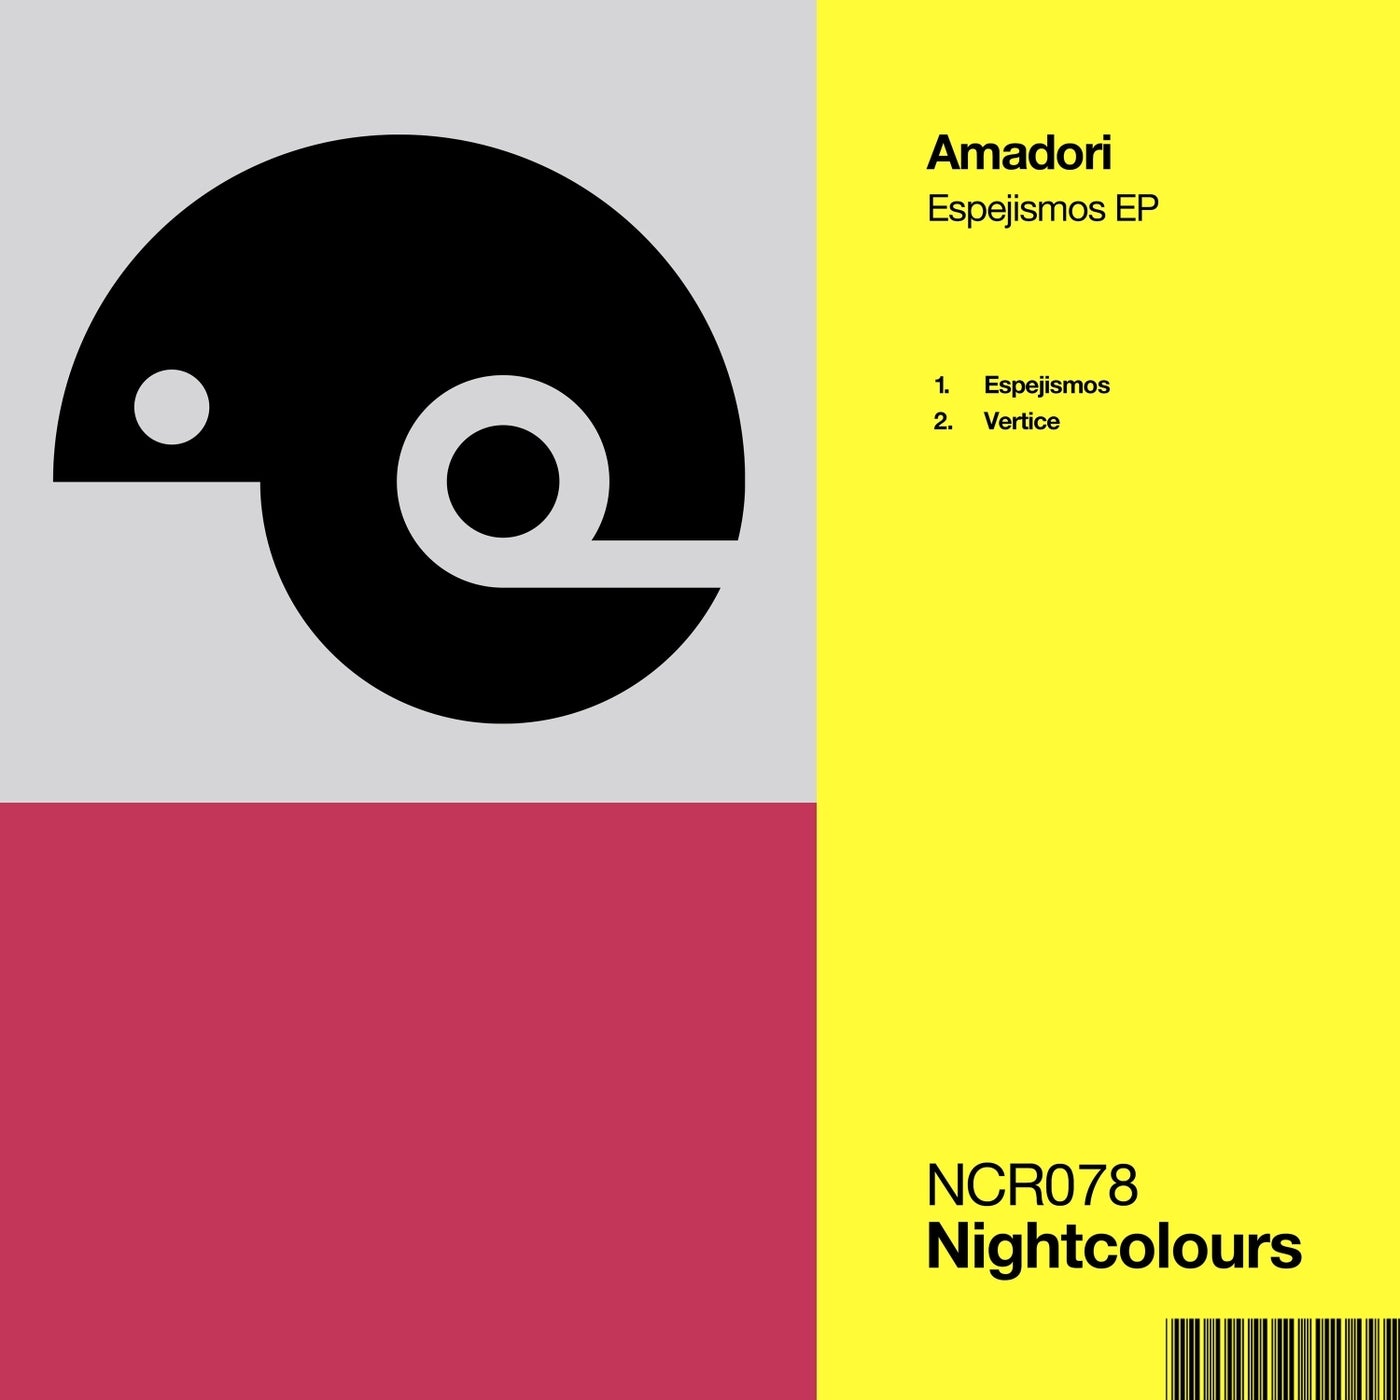 image cover: Amadori - Espejismos EP on Nightcolours